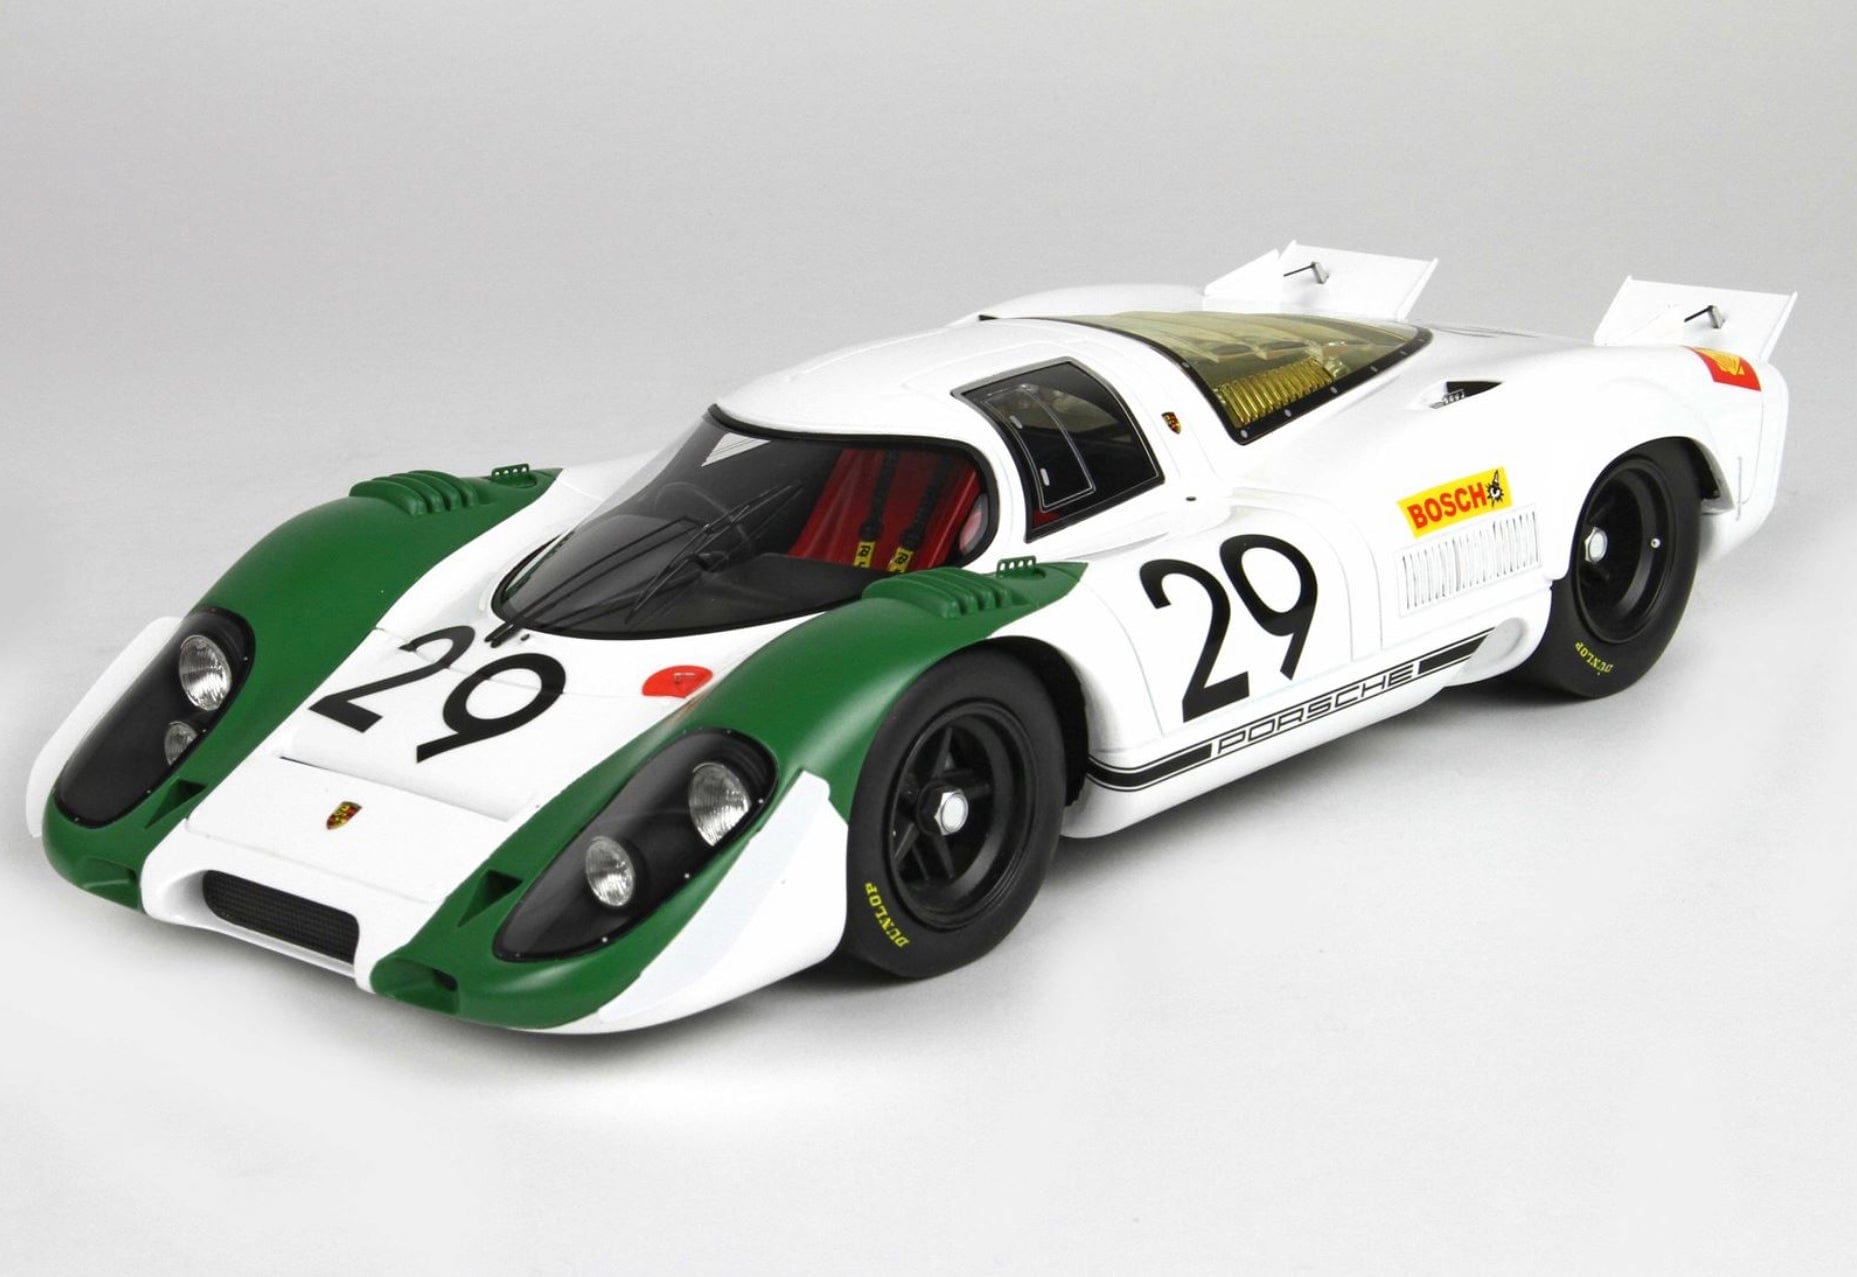 Porsche 917 69 1000 Km Zeltweg 1969 Winner BBR Models 1/18 Scale